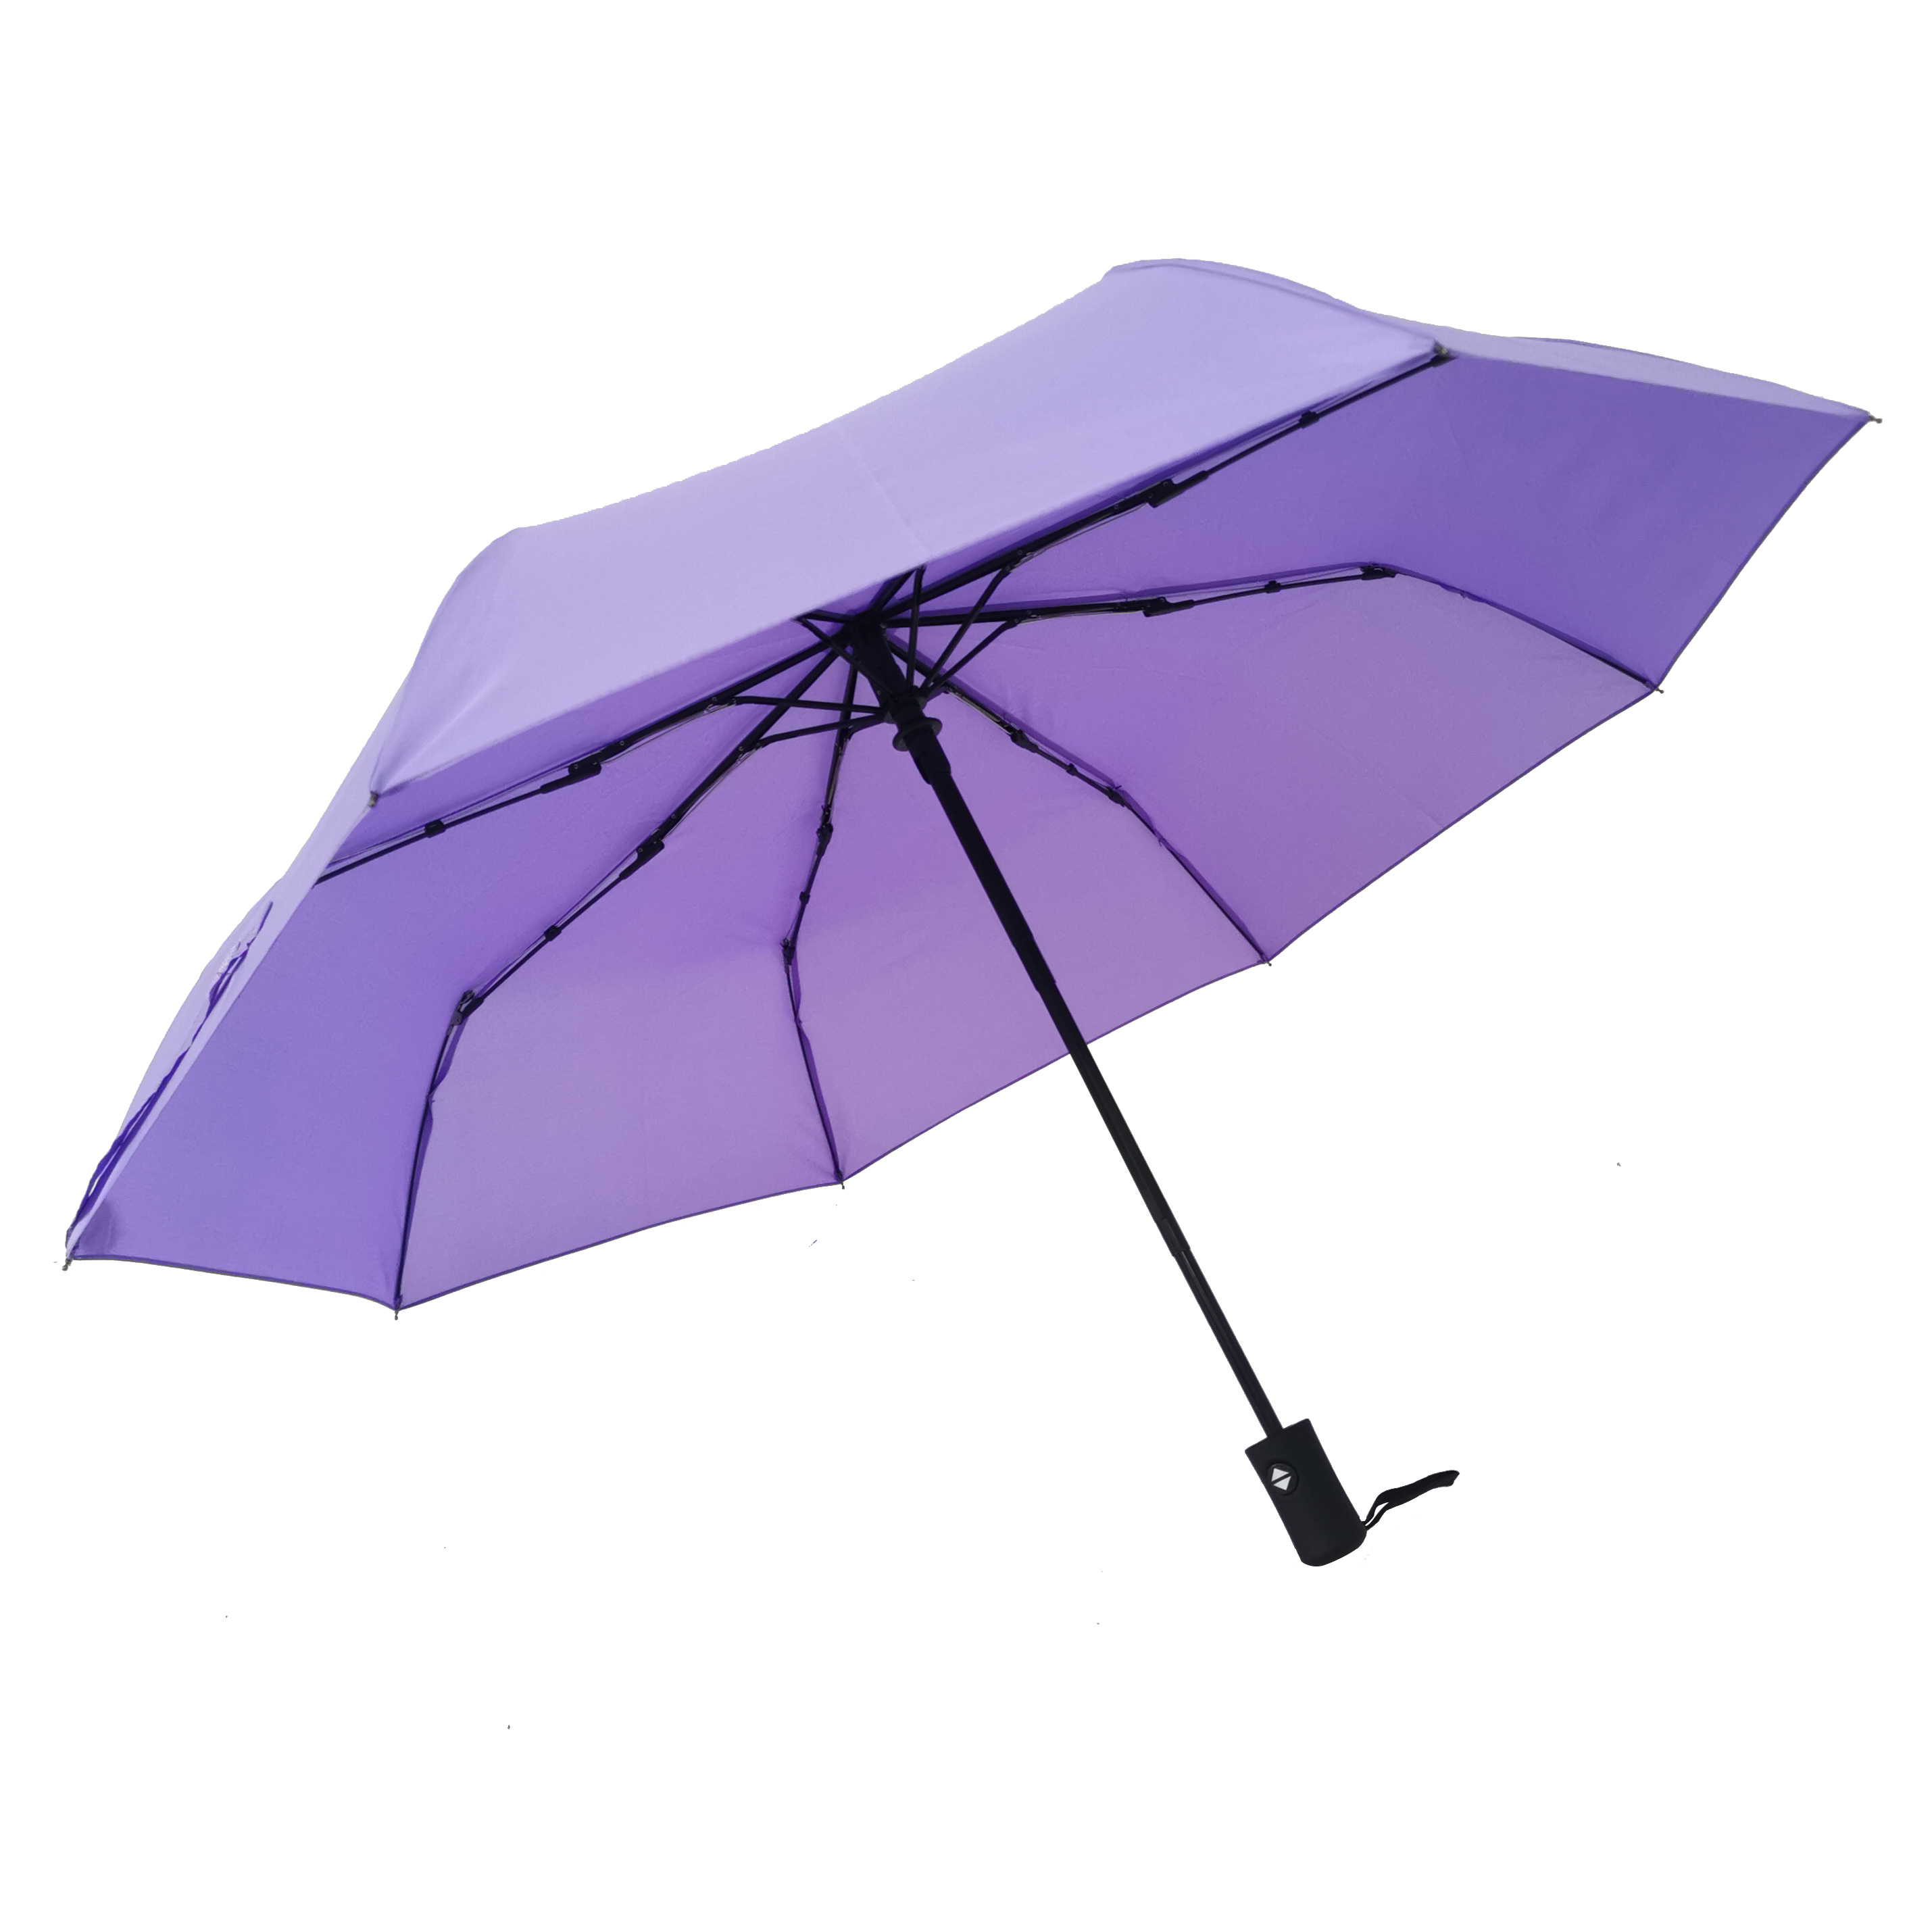 https://www.hodaumbrella.com/ultra-low-price-lding-umbrella-product/